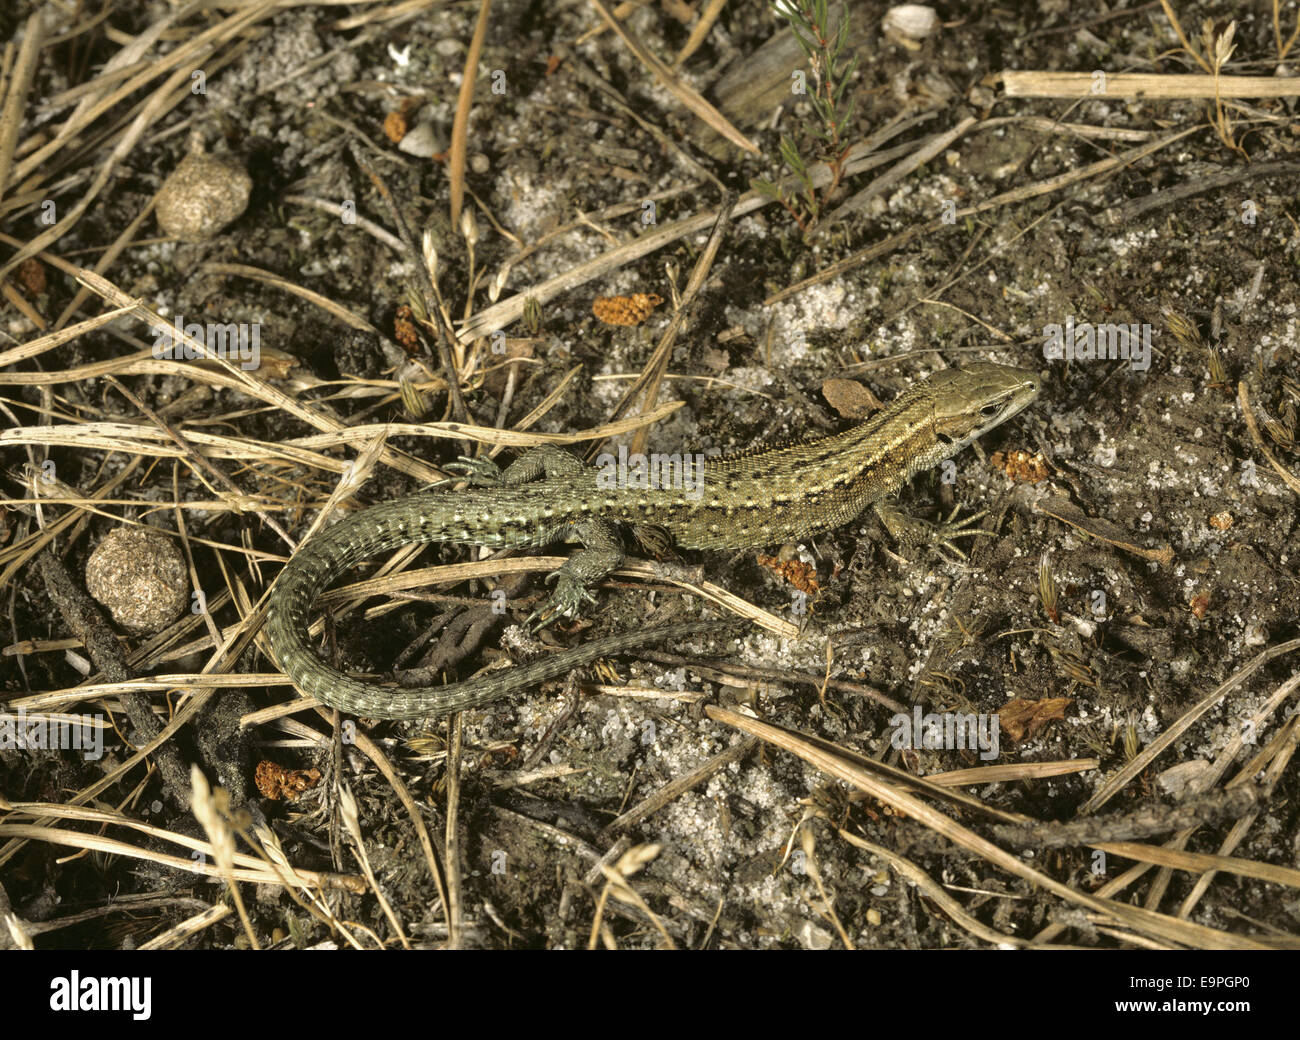 Common Lizard - Lacerta vivipara Stock Photo